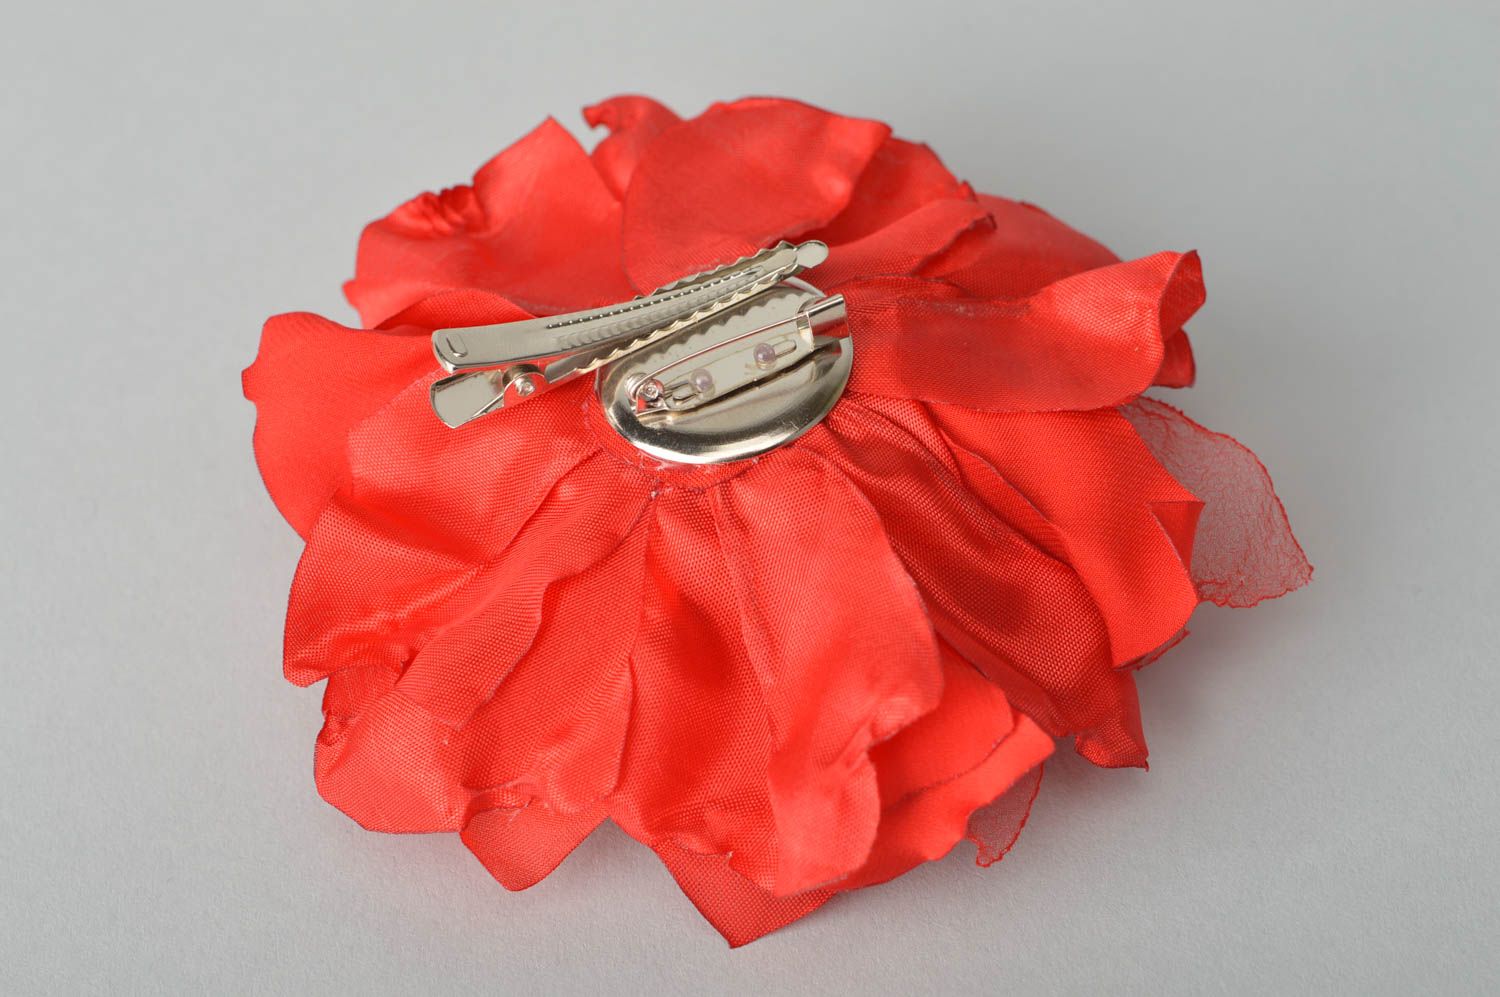 Handmade jewelry transformer stylish brooch hair clip unusual red flower photo 5